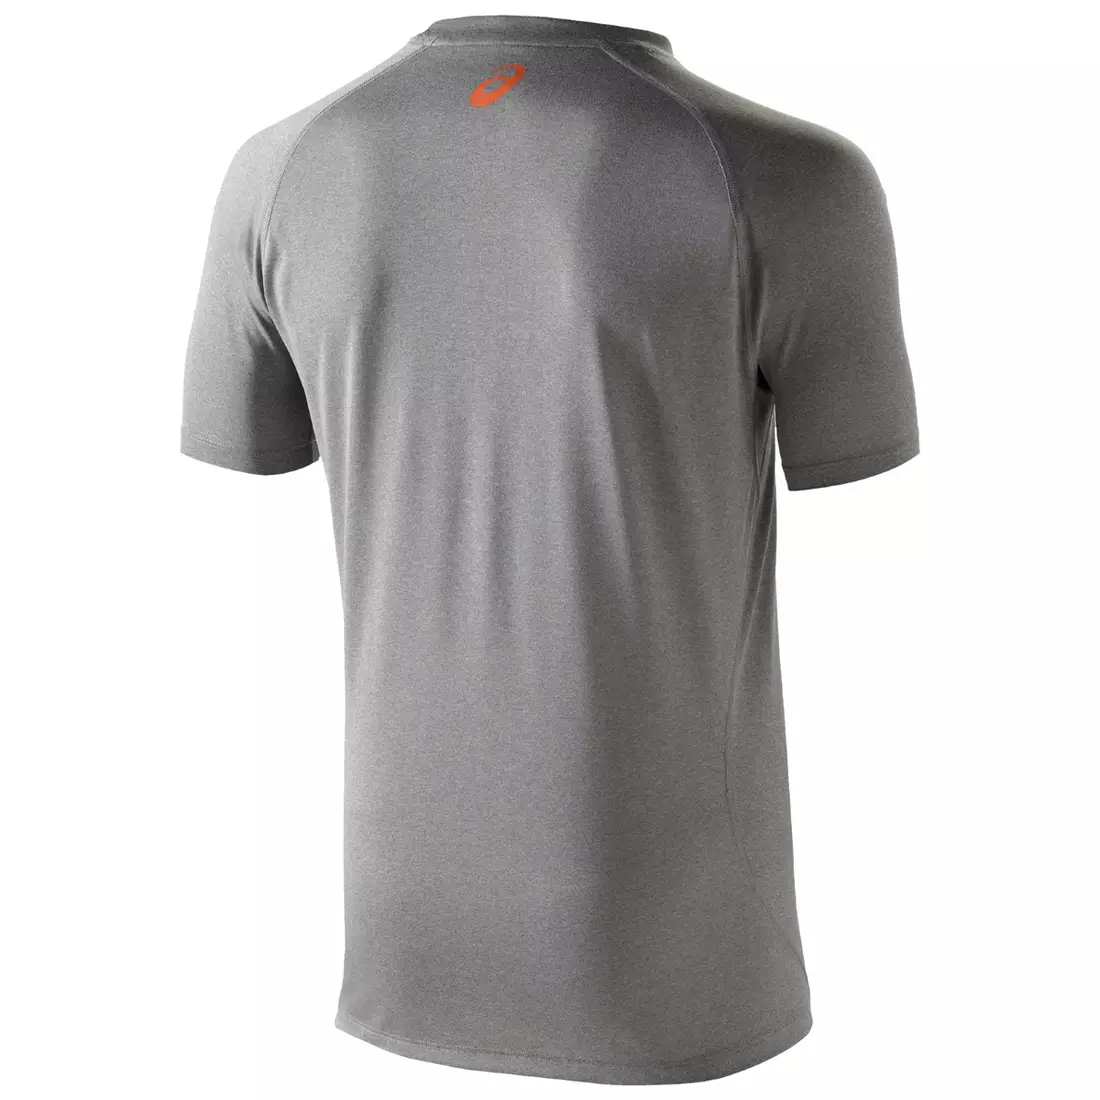 ASICS 110519-0714 SOUKAI GRAPHIC TOP - men's running T-shirt, color: Gray